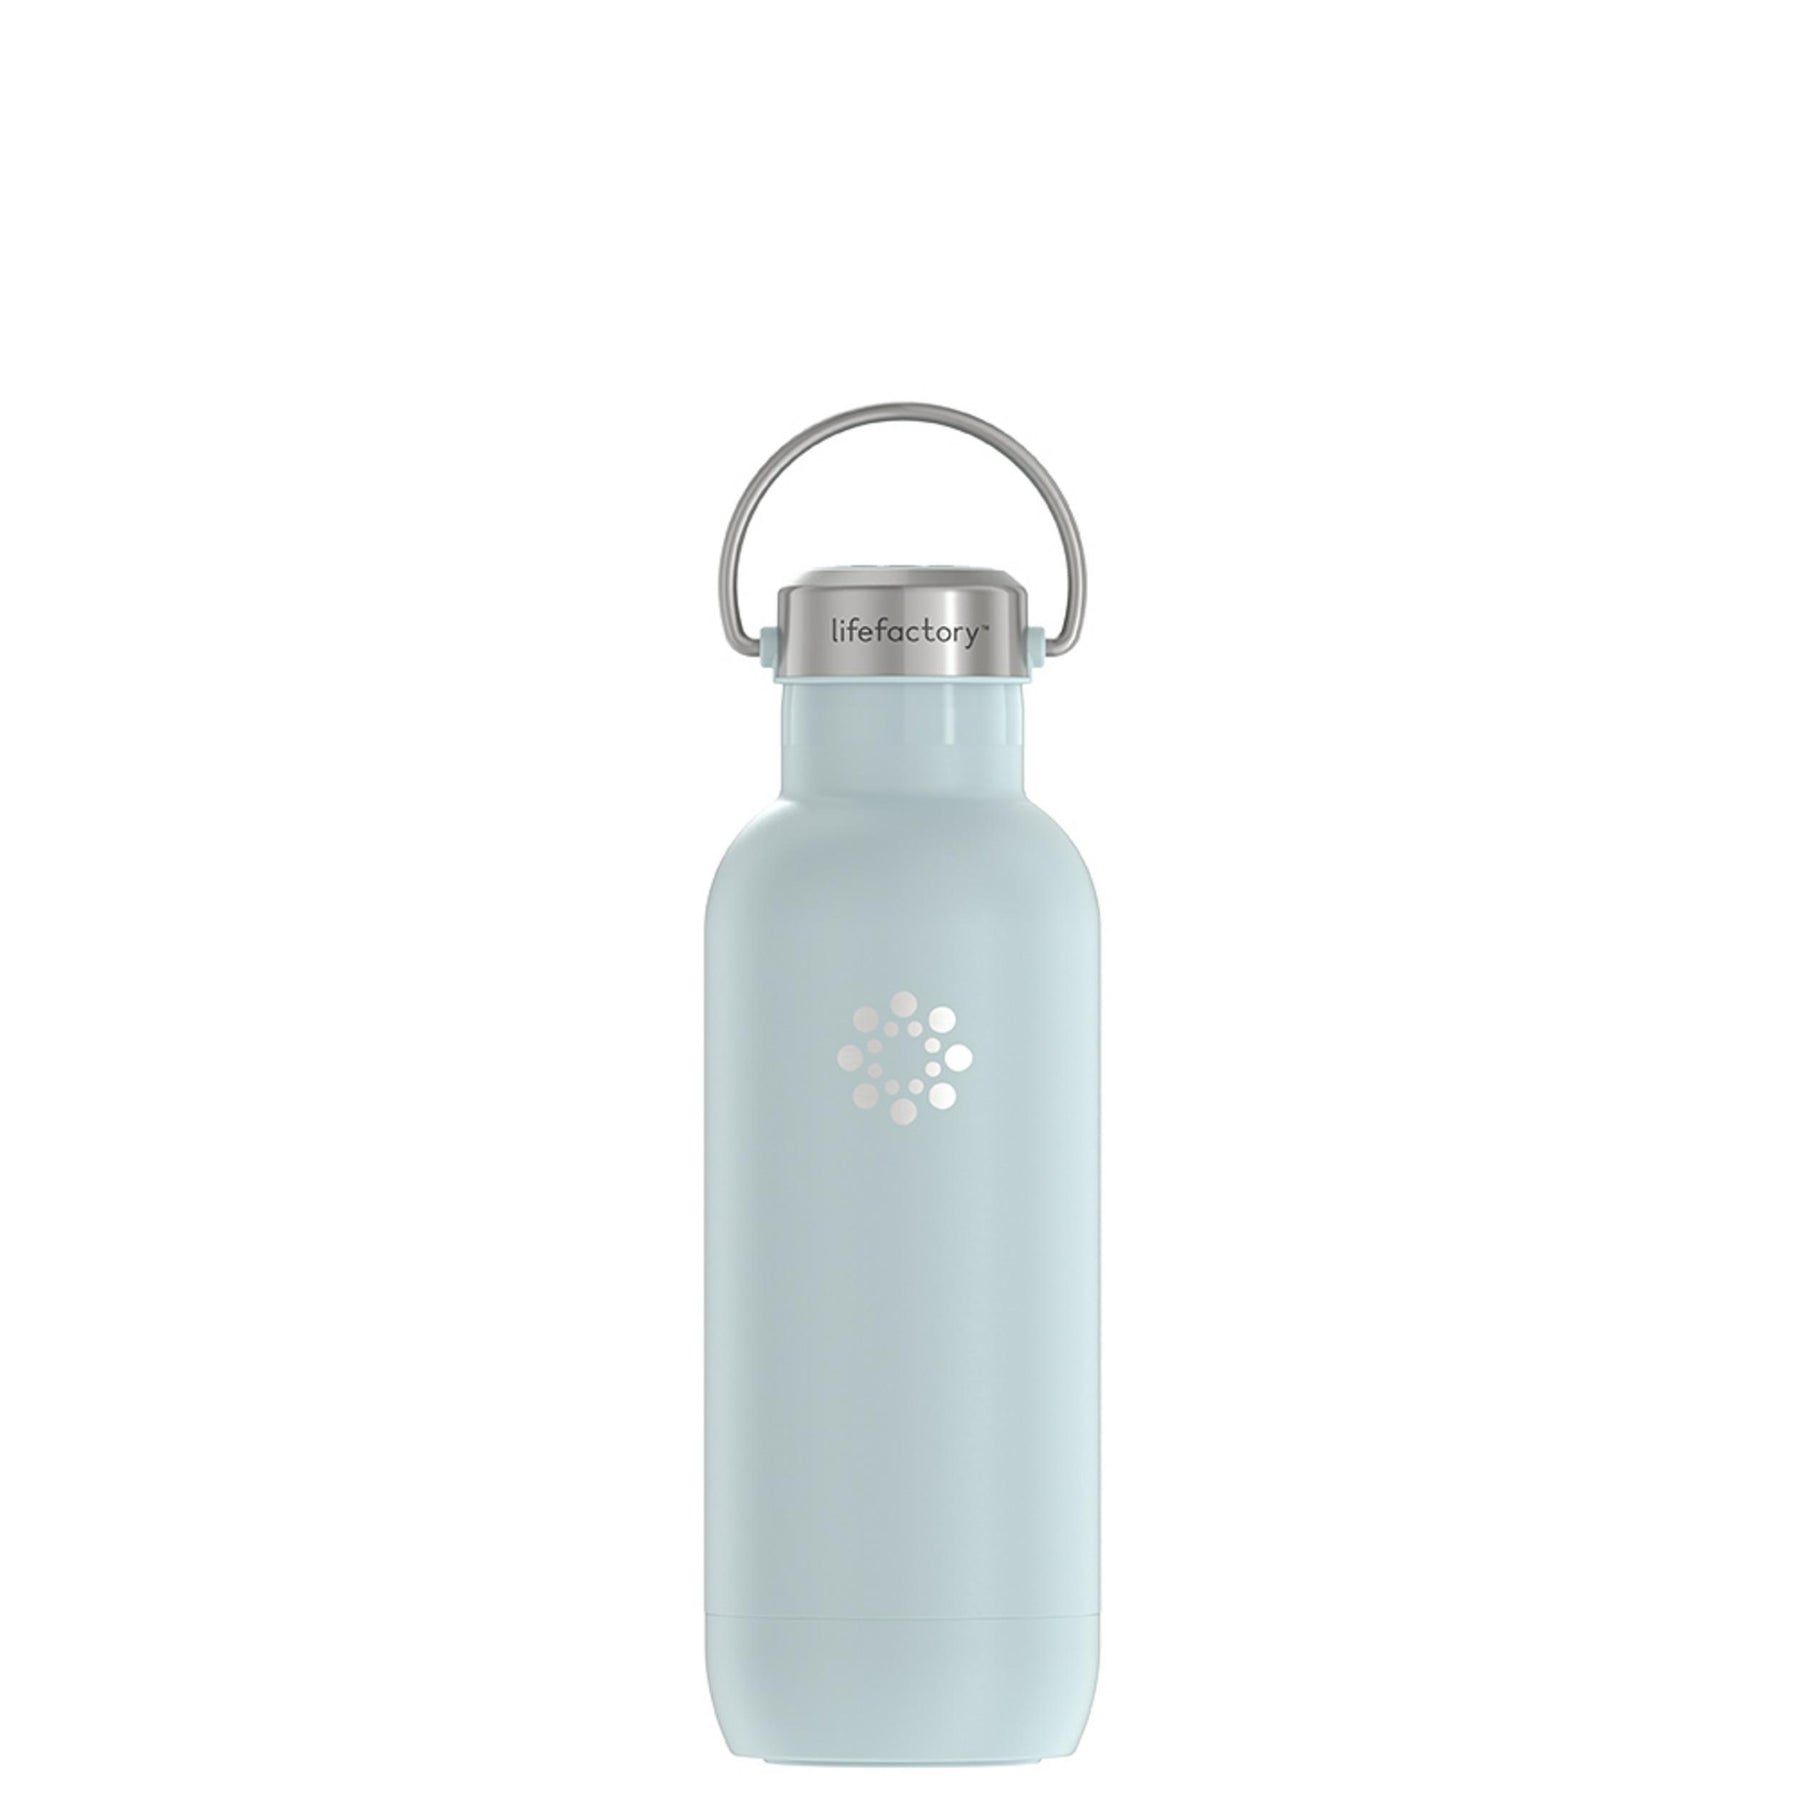  Hydro Flask 20 oz. Water Bottle - Stainless Steel